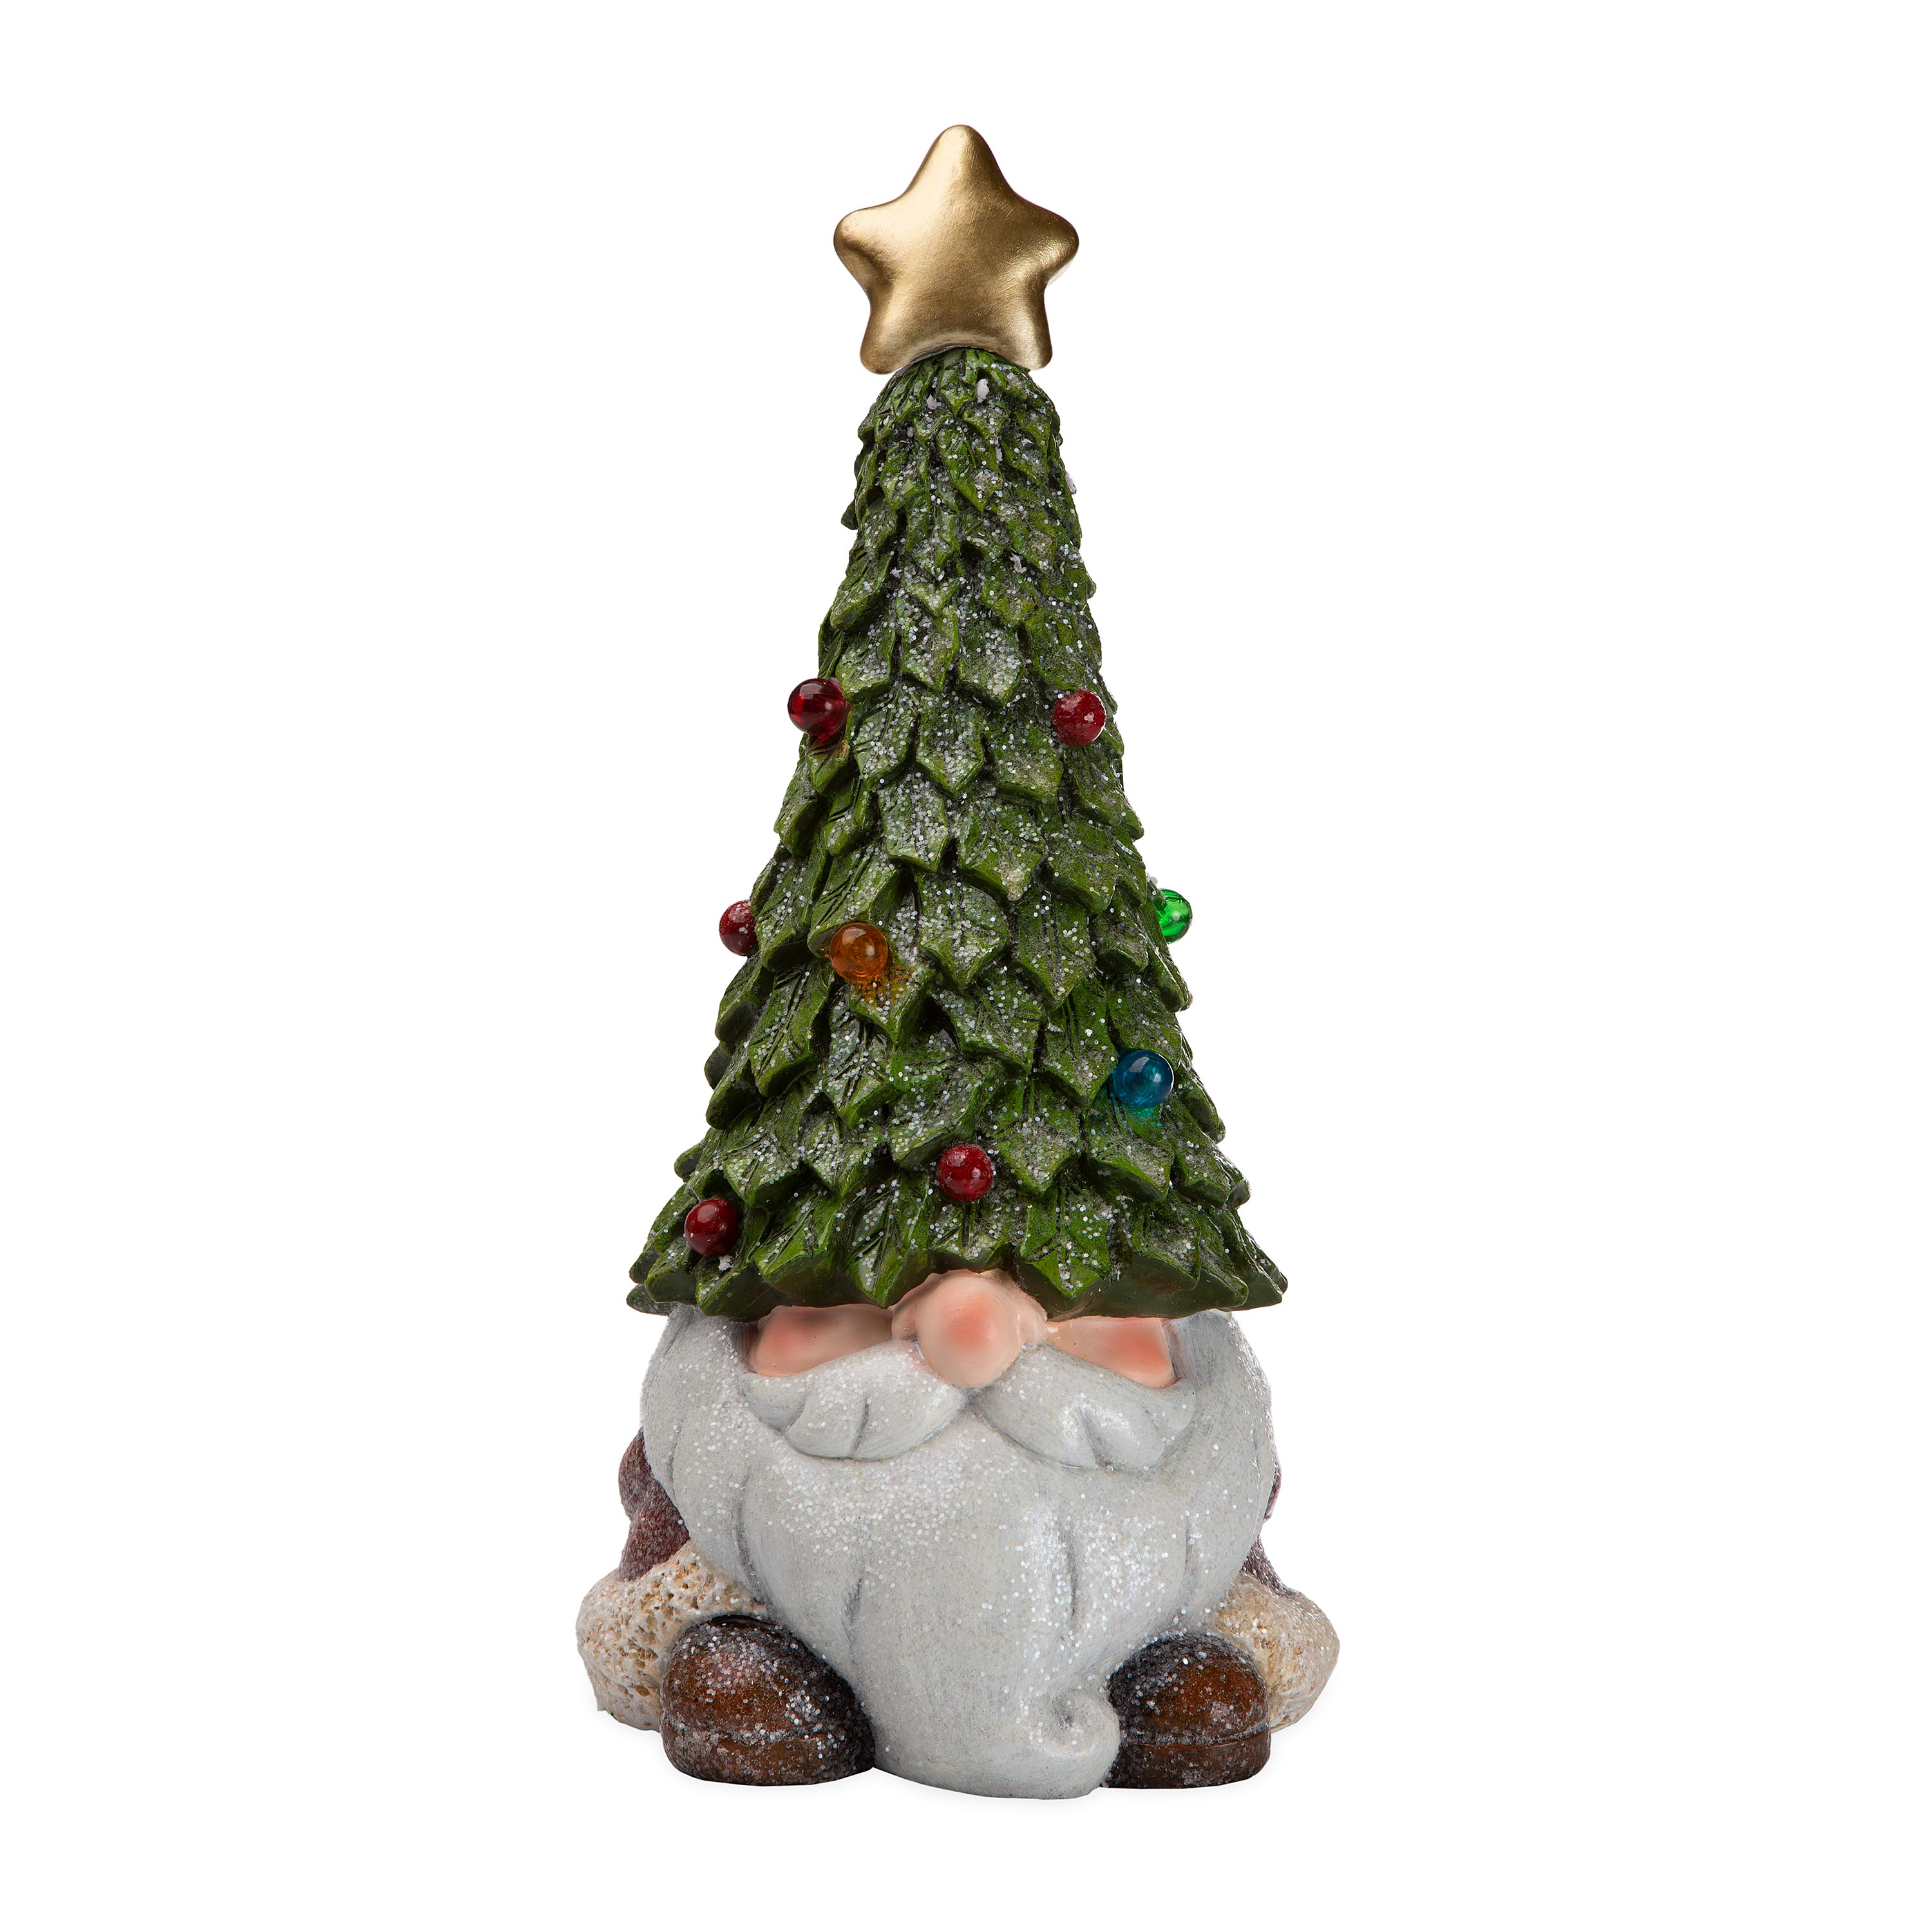  Christmas Tree Topper,Gnome Christmas Decoration,Hand Made  Christmas Tree Decoration,Festive Gnome Christmas Decorations - Unique  Gnome Tree Topper… : Home & Kitchen